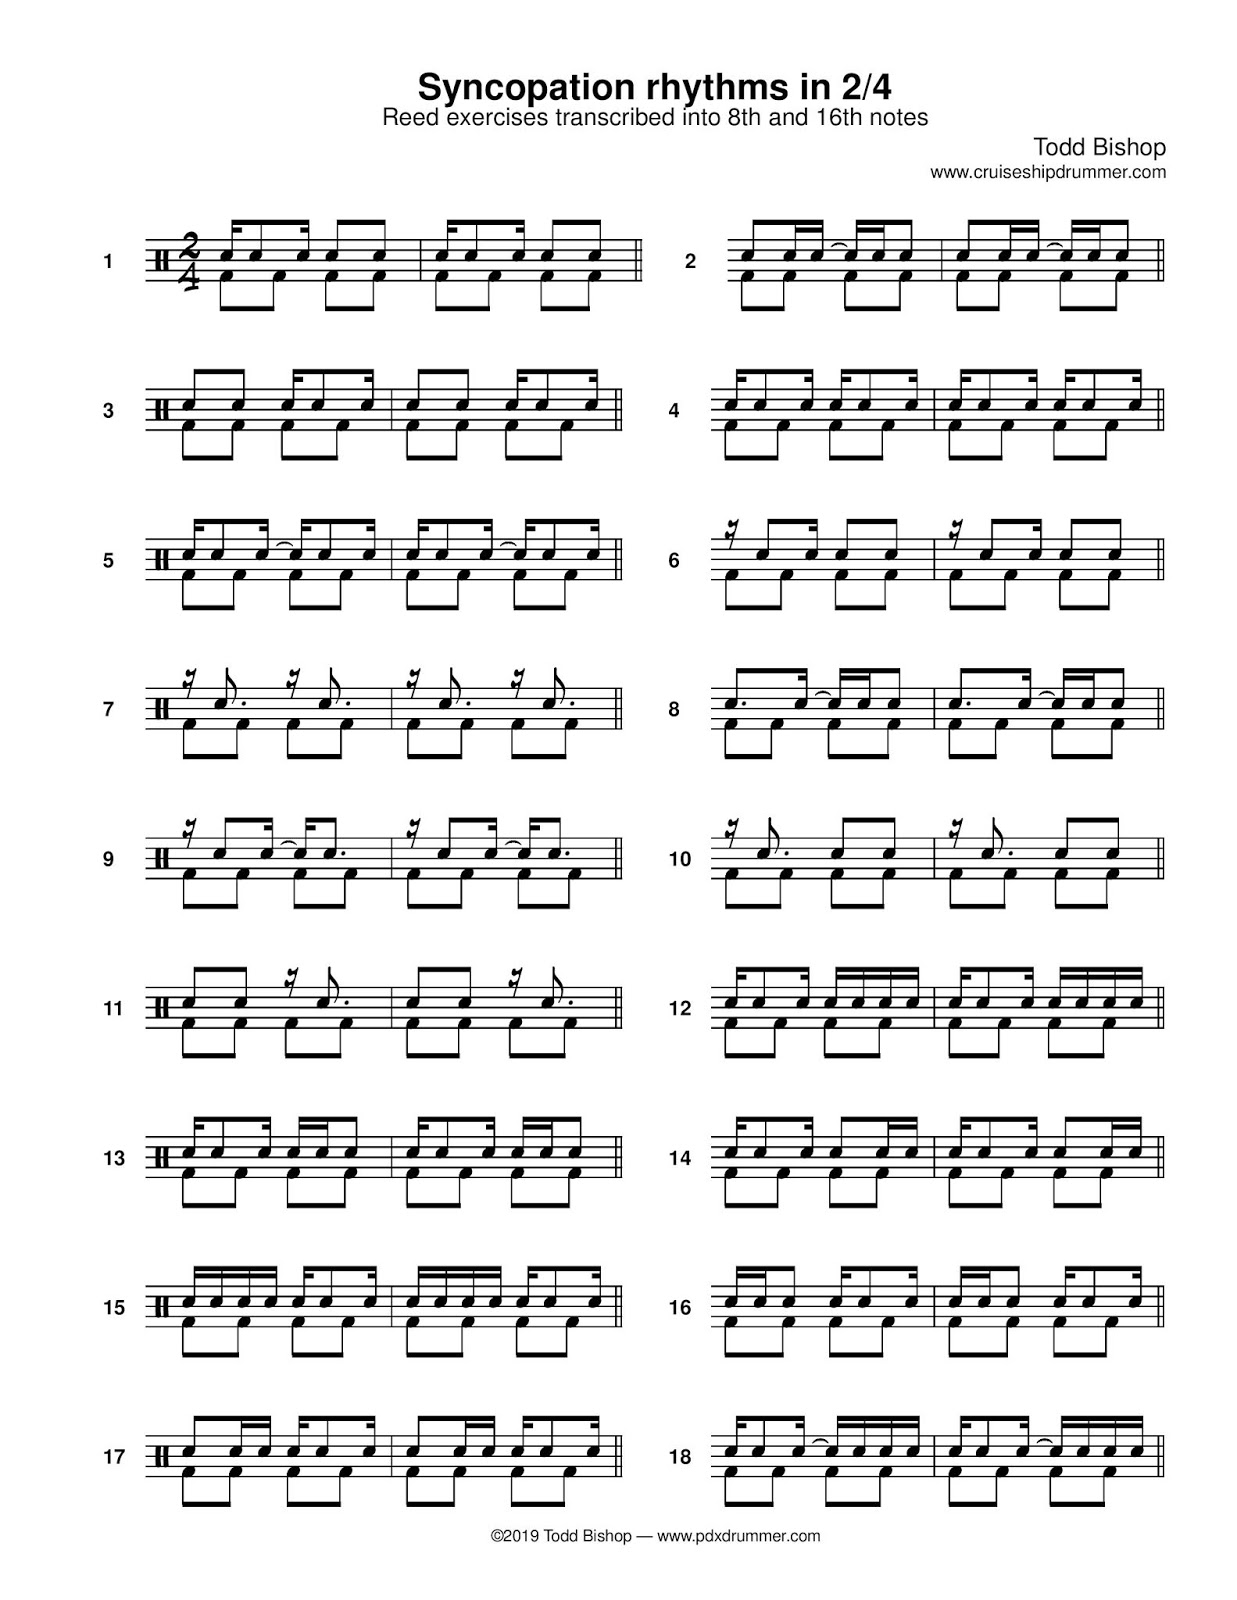 Cruise Ship Drummer!: Syncopation rhythms in 16th notes